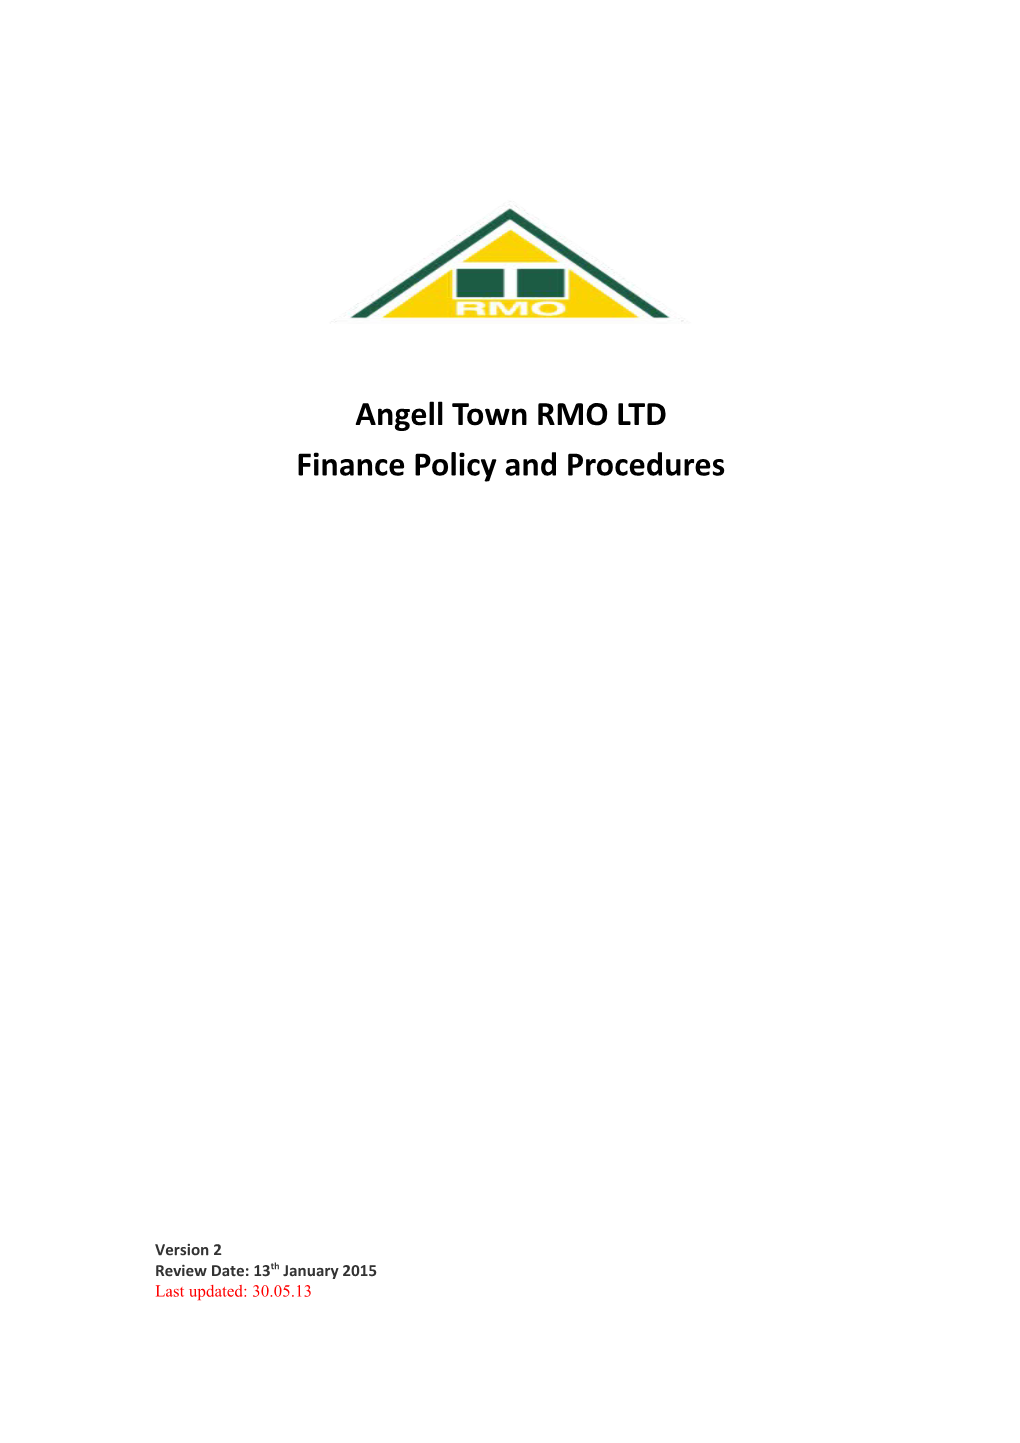 Angell Town Estate Management Board